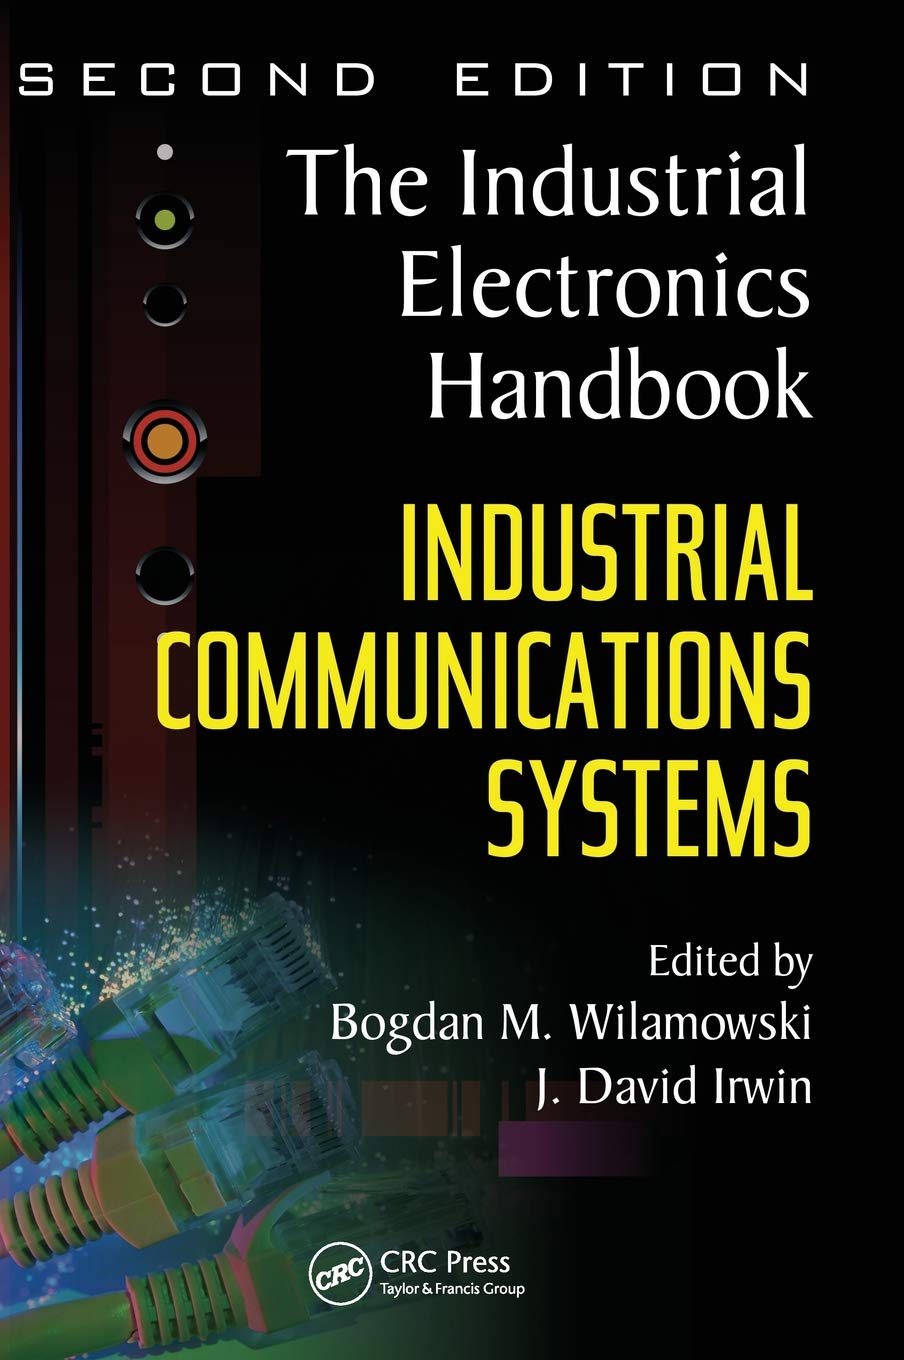 The Industrial Electronics Handbook: Industrial Communication Systems 2 Edición J. David Irwin PDF